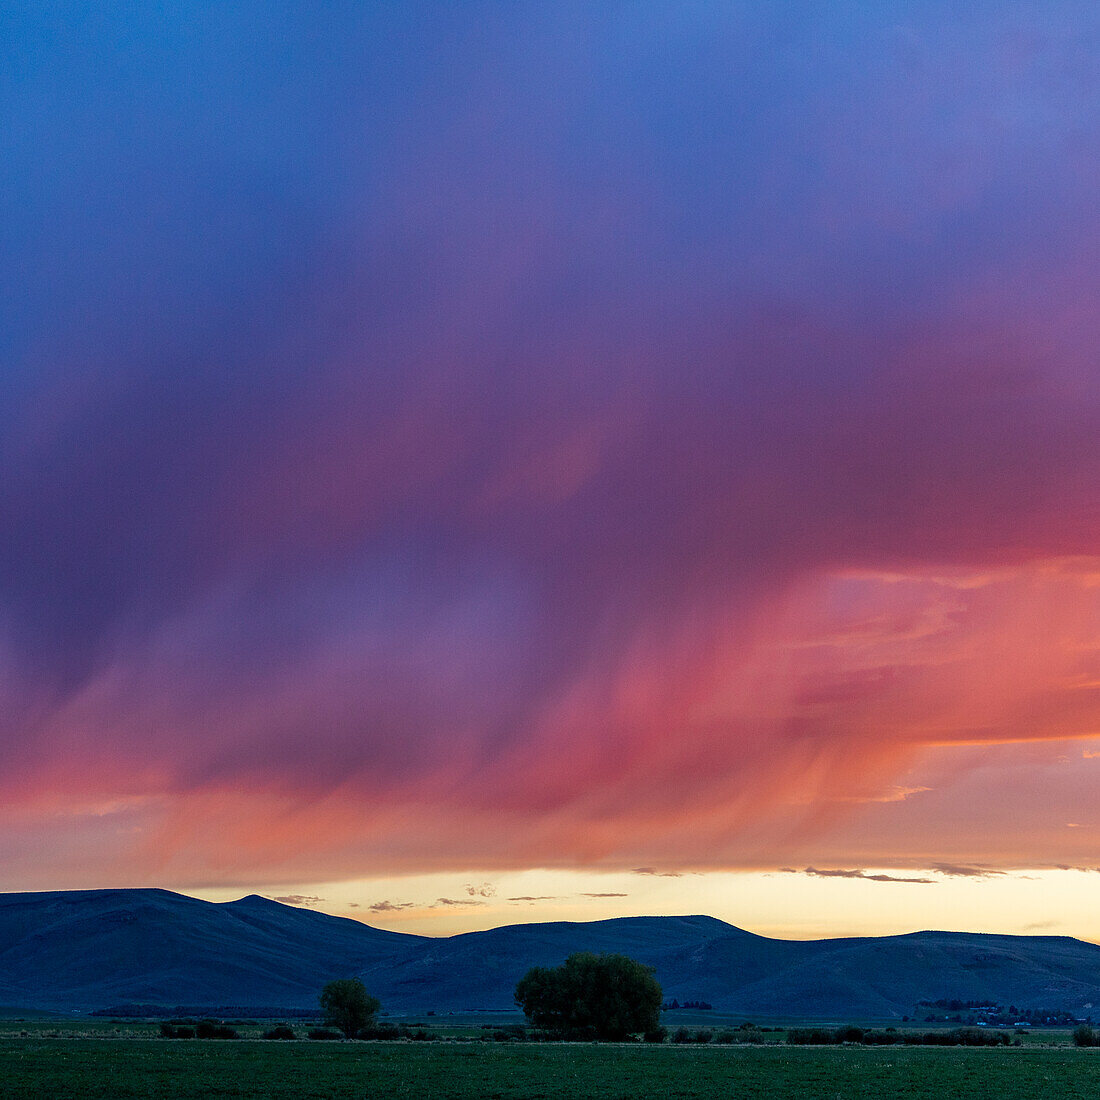 USA, Idaho, Bellevue, Cloudy sunset sky over rural landscape